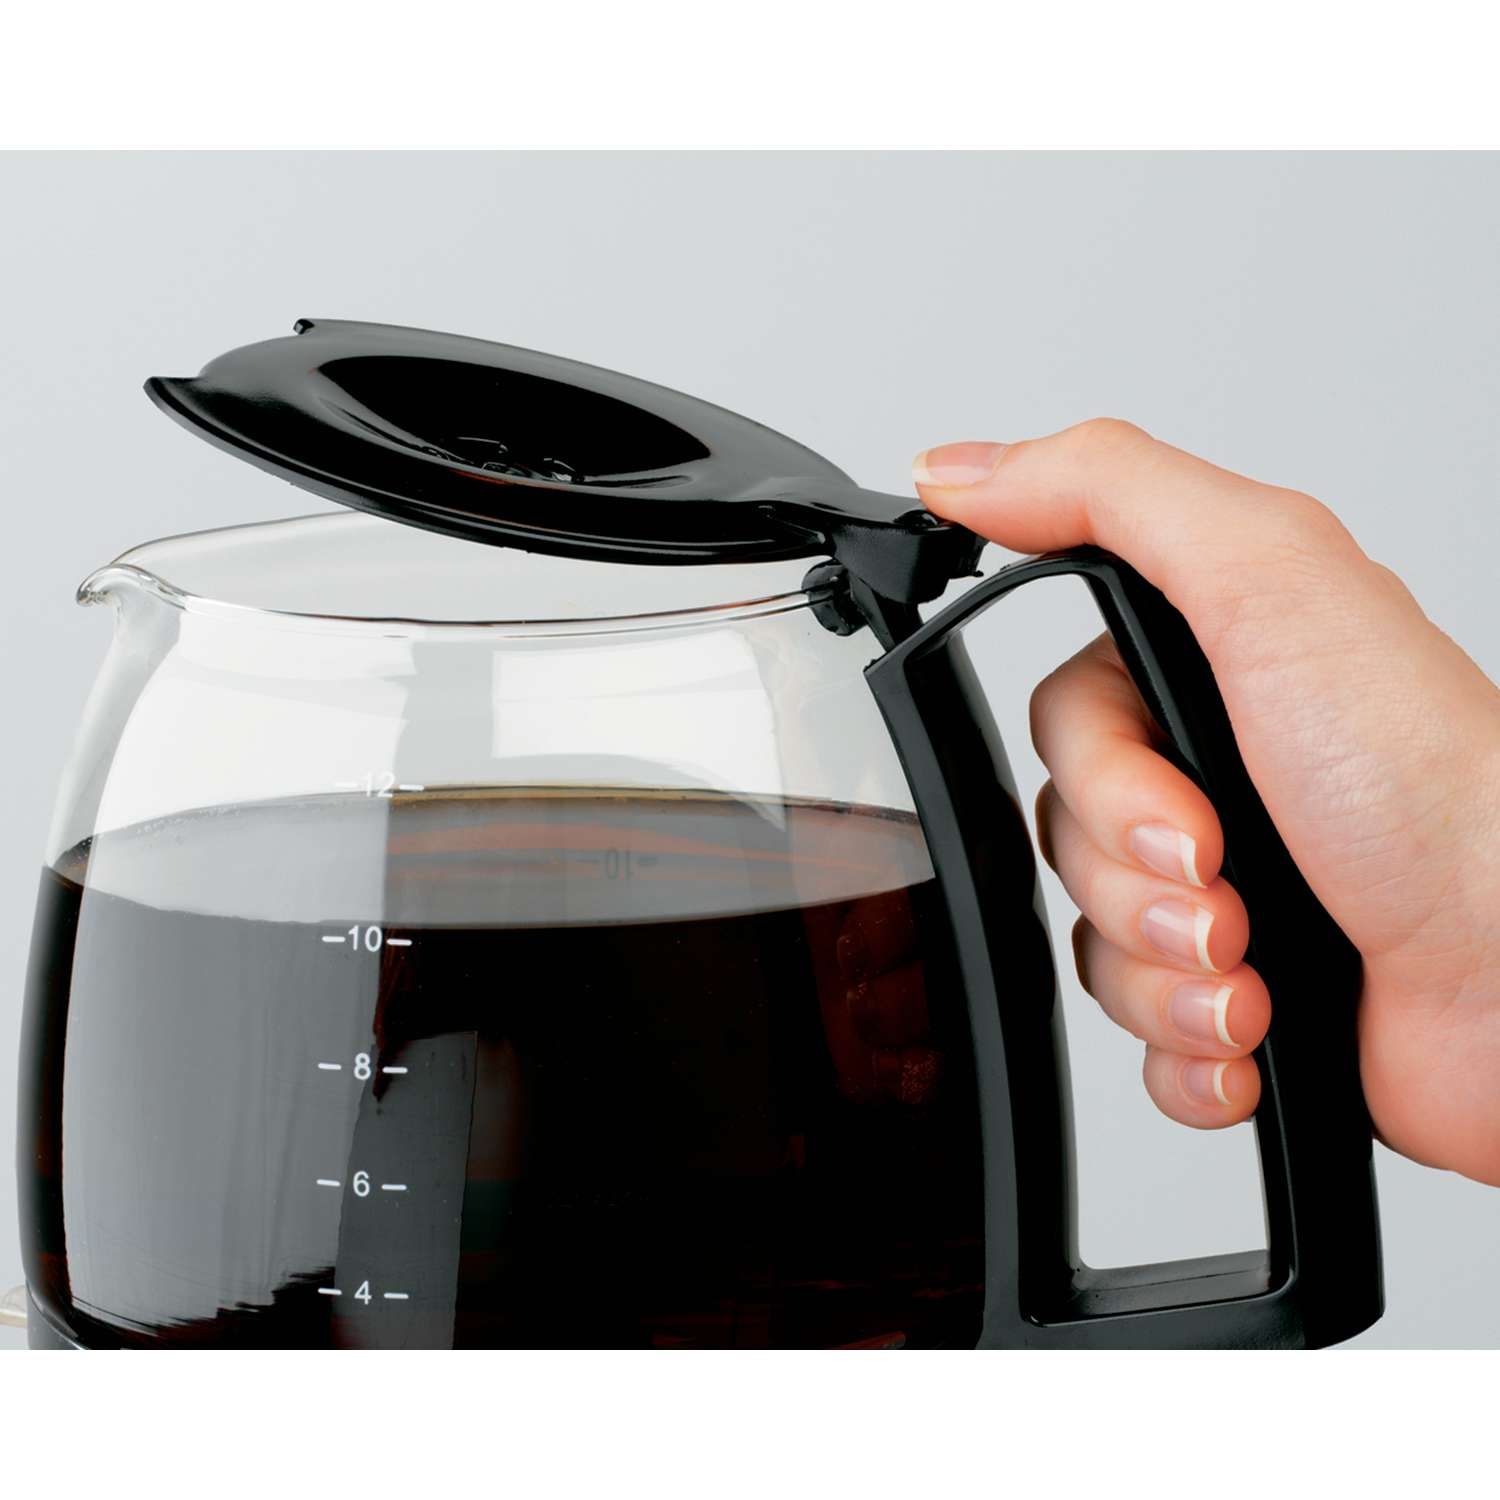 Proctor-Silex Commercial Coffee Brewer/Server: 100-cup, Hamilton Beach